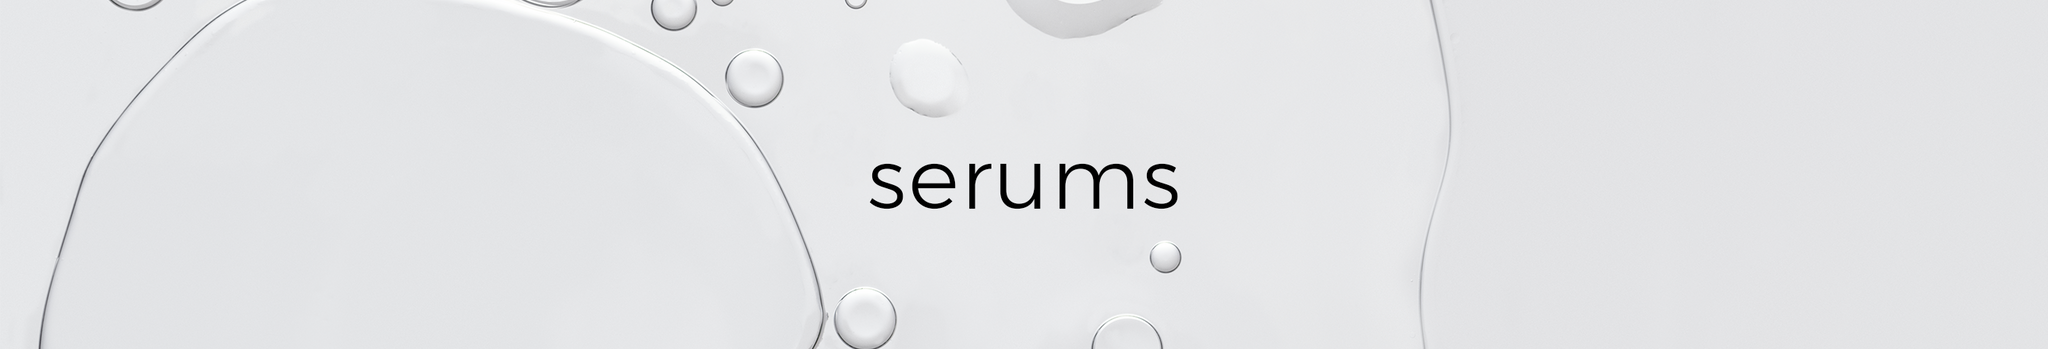 serums